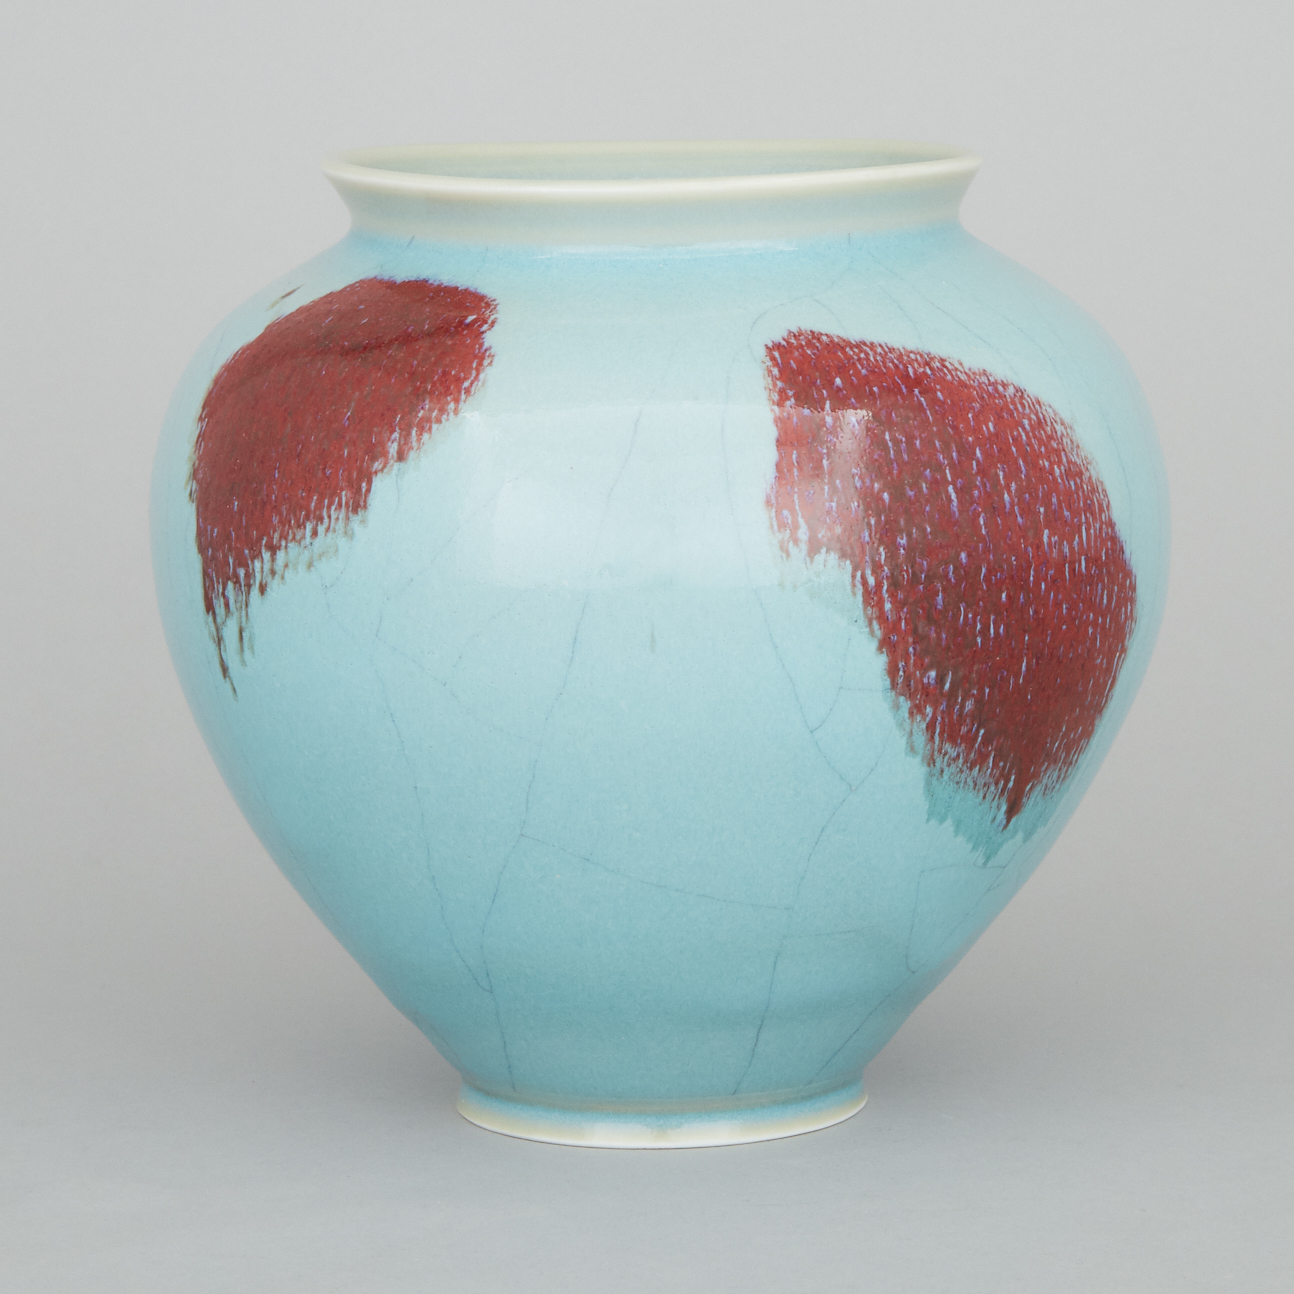 Harlan House (Canadian, b.1943), Celadon and Oxblood Glazed Vase, 1992